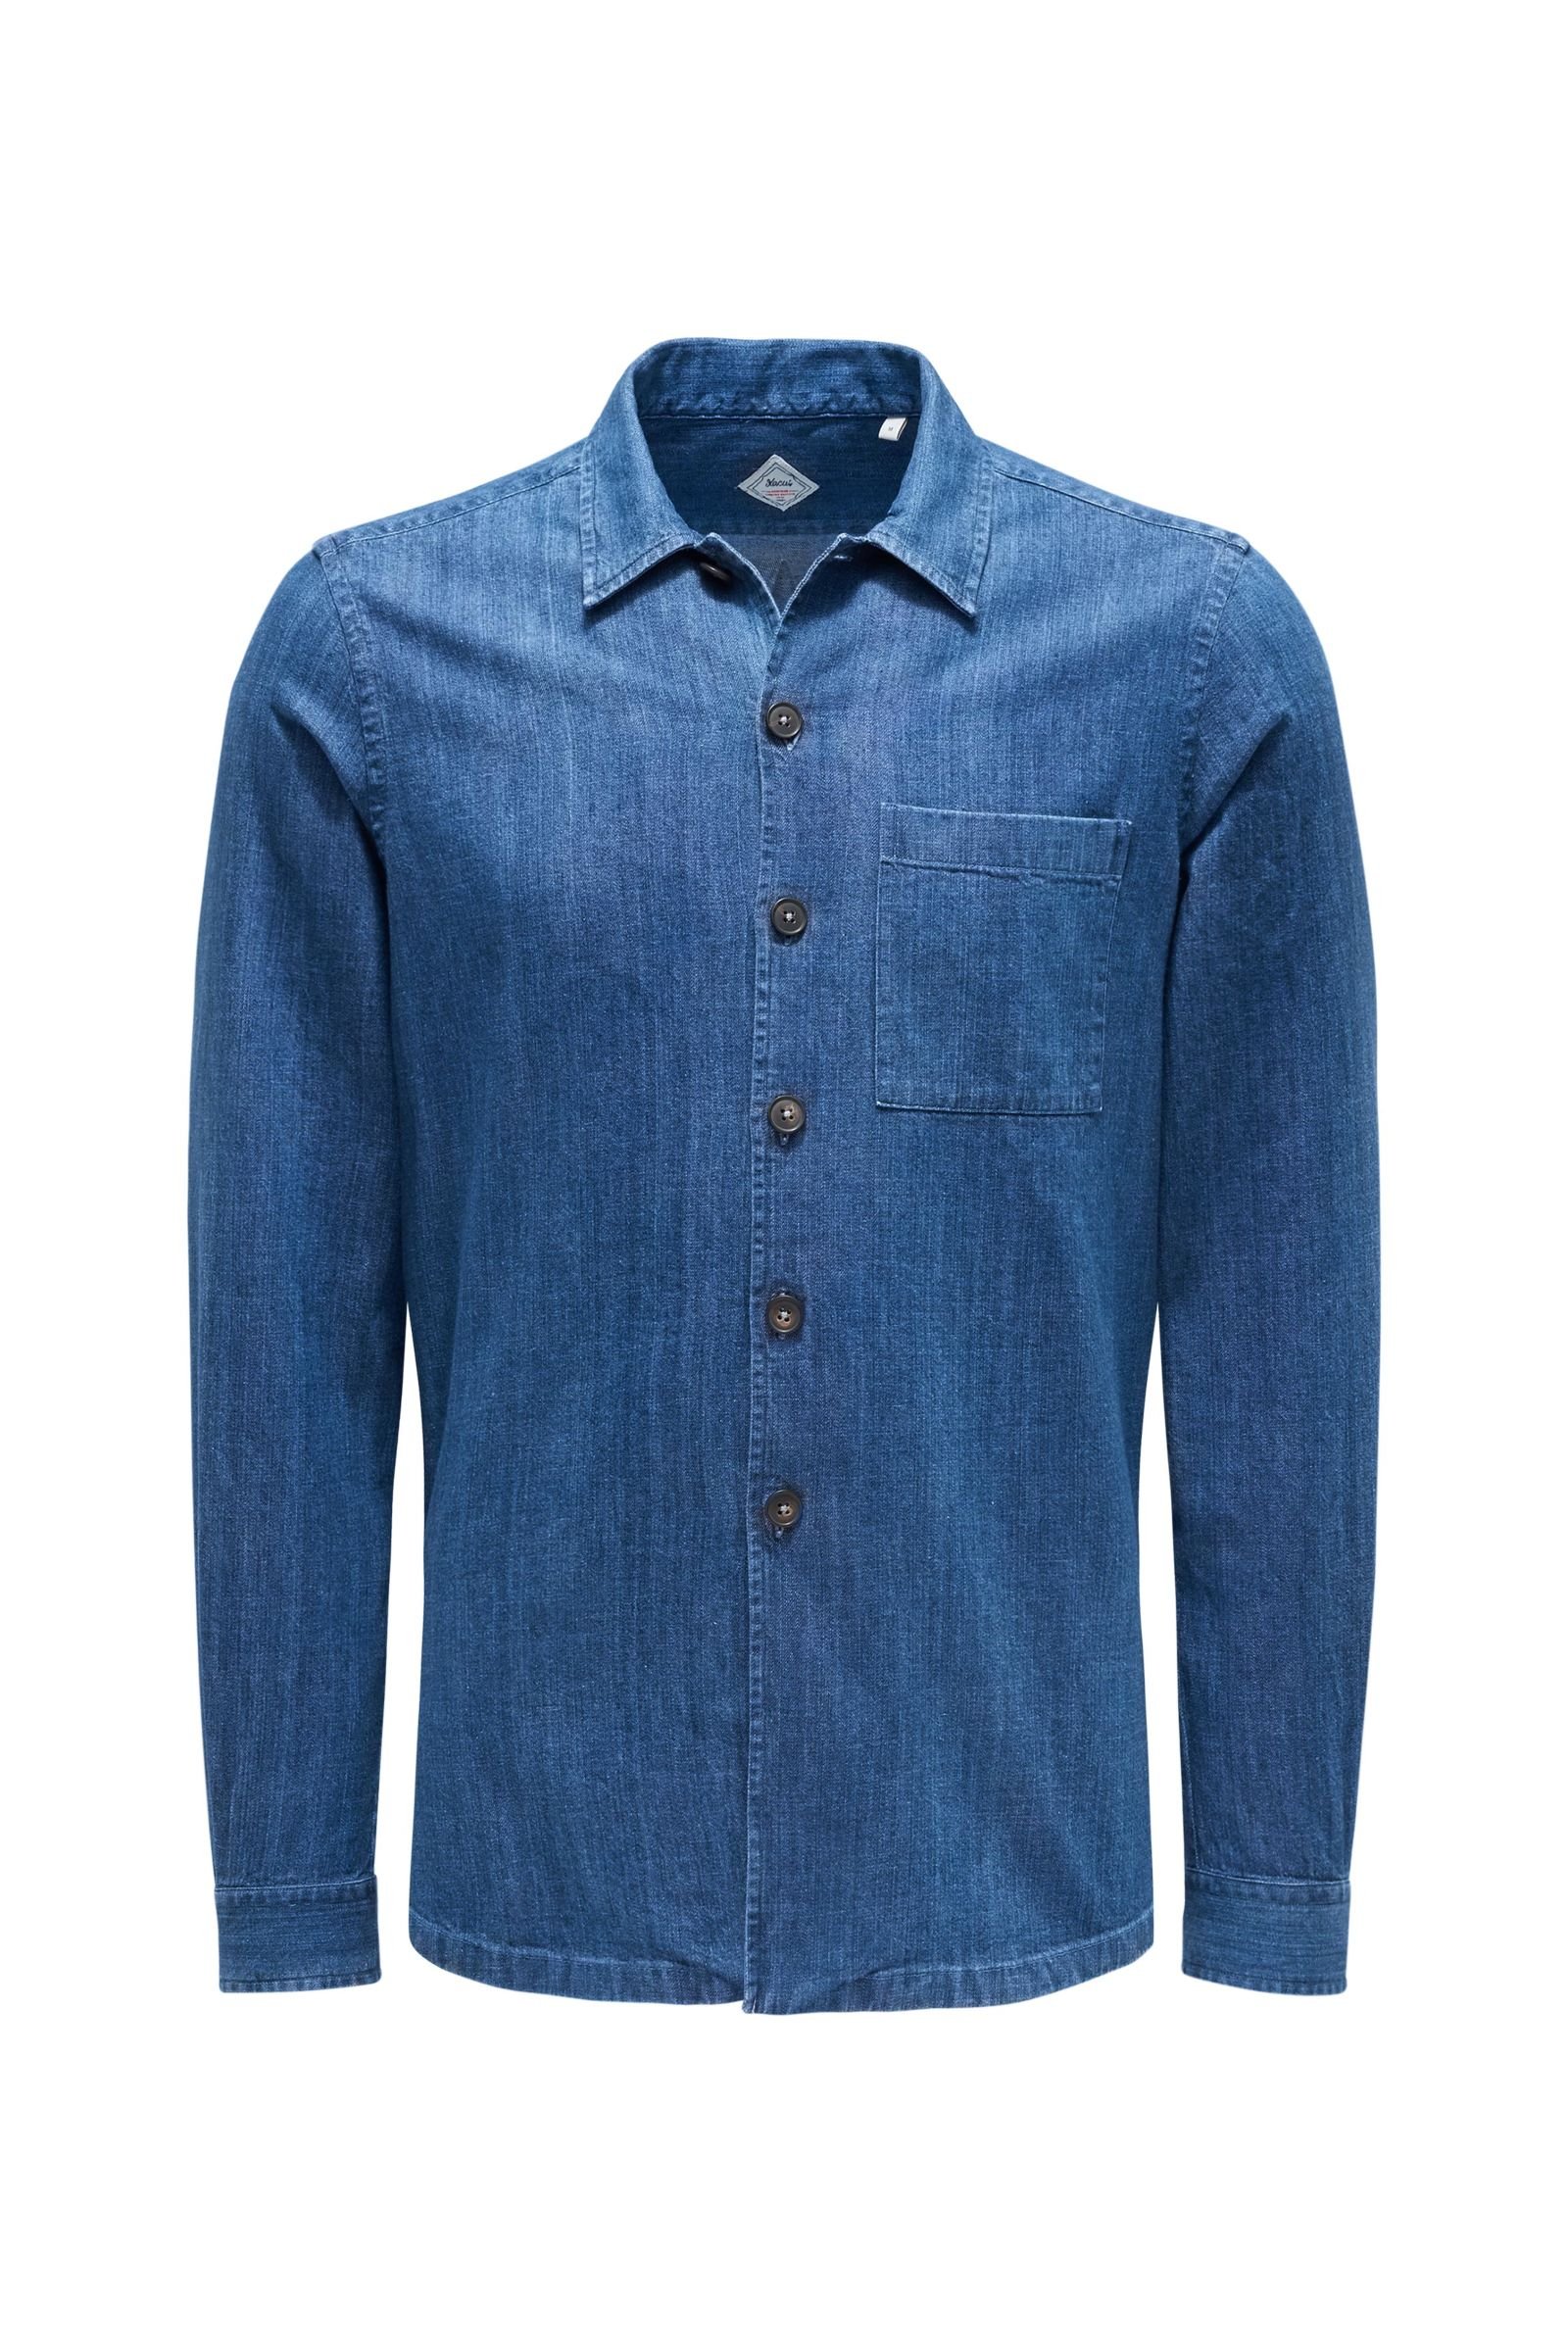 Jeans-Overshirt 'Heritage Limited Edition' graublau